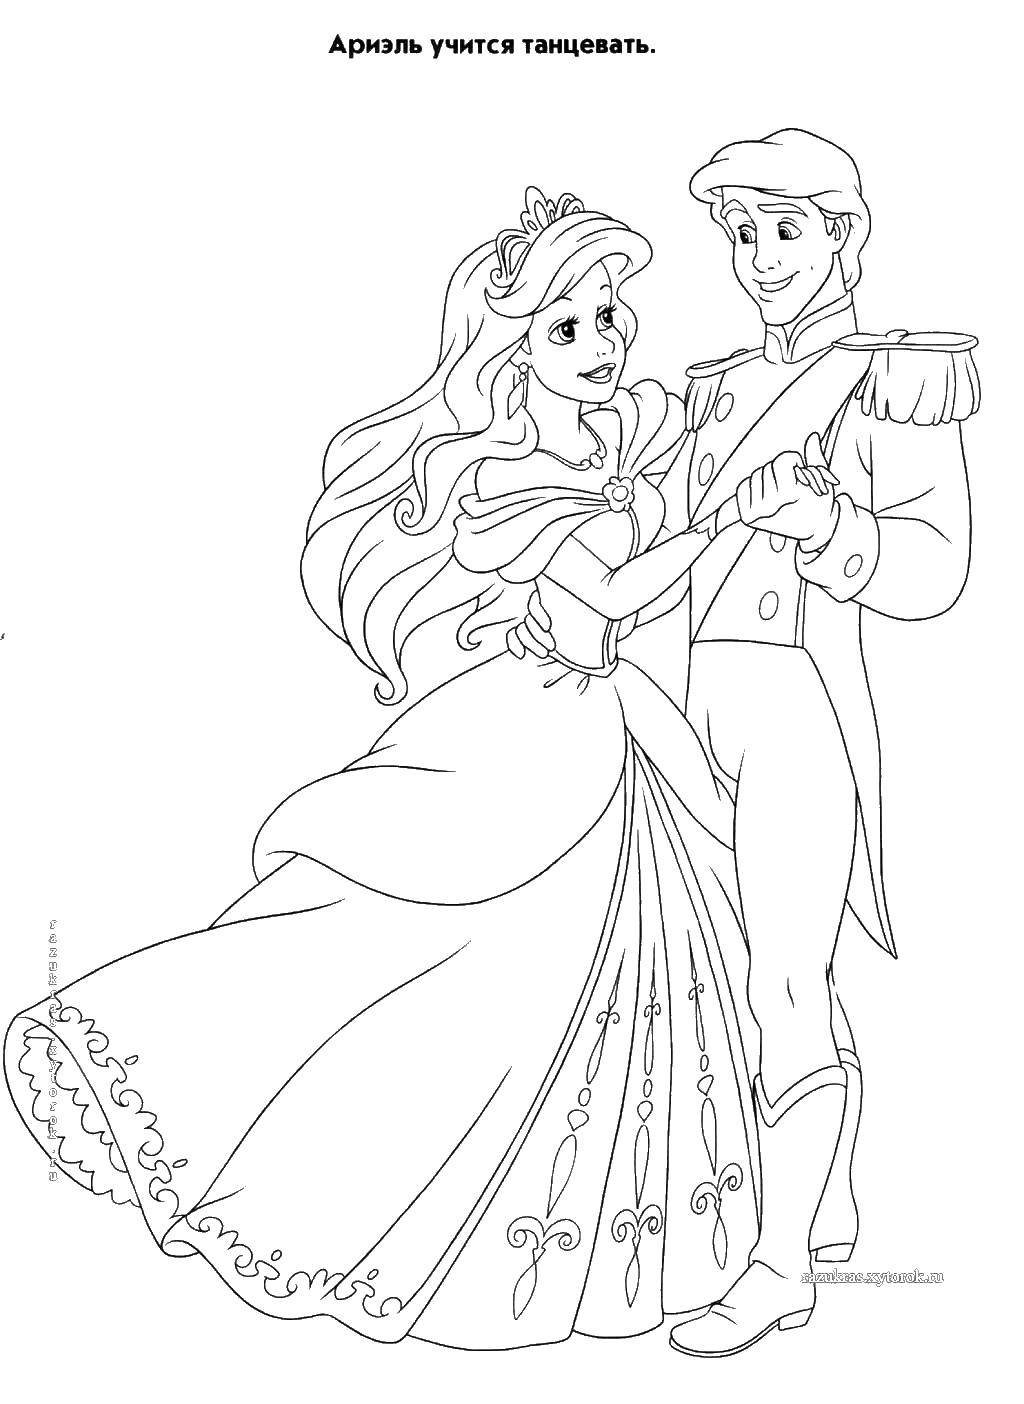 Coloring Ariel. Category Princess. Tags:  Princess Ariel, Prince Eric.